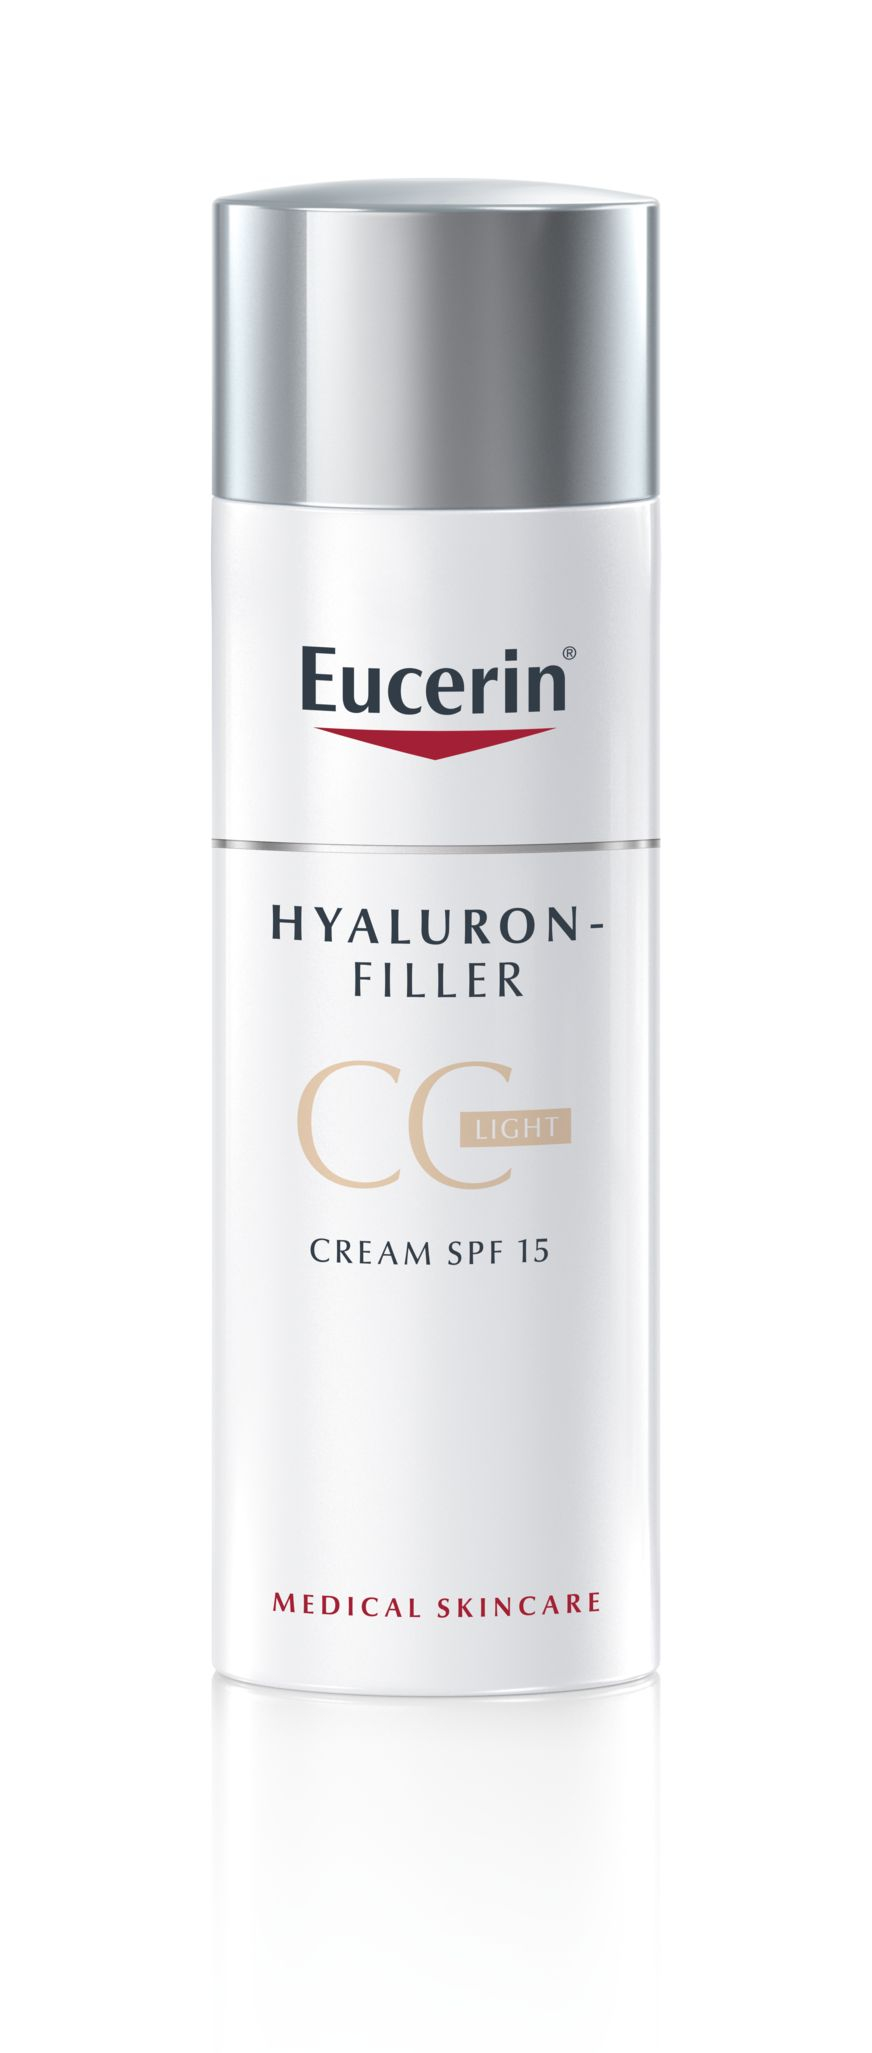 Eucerin Hyaluron-Filler CC krém světlý 50 ml Eucerin